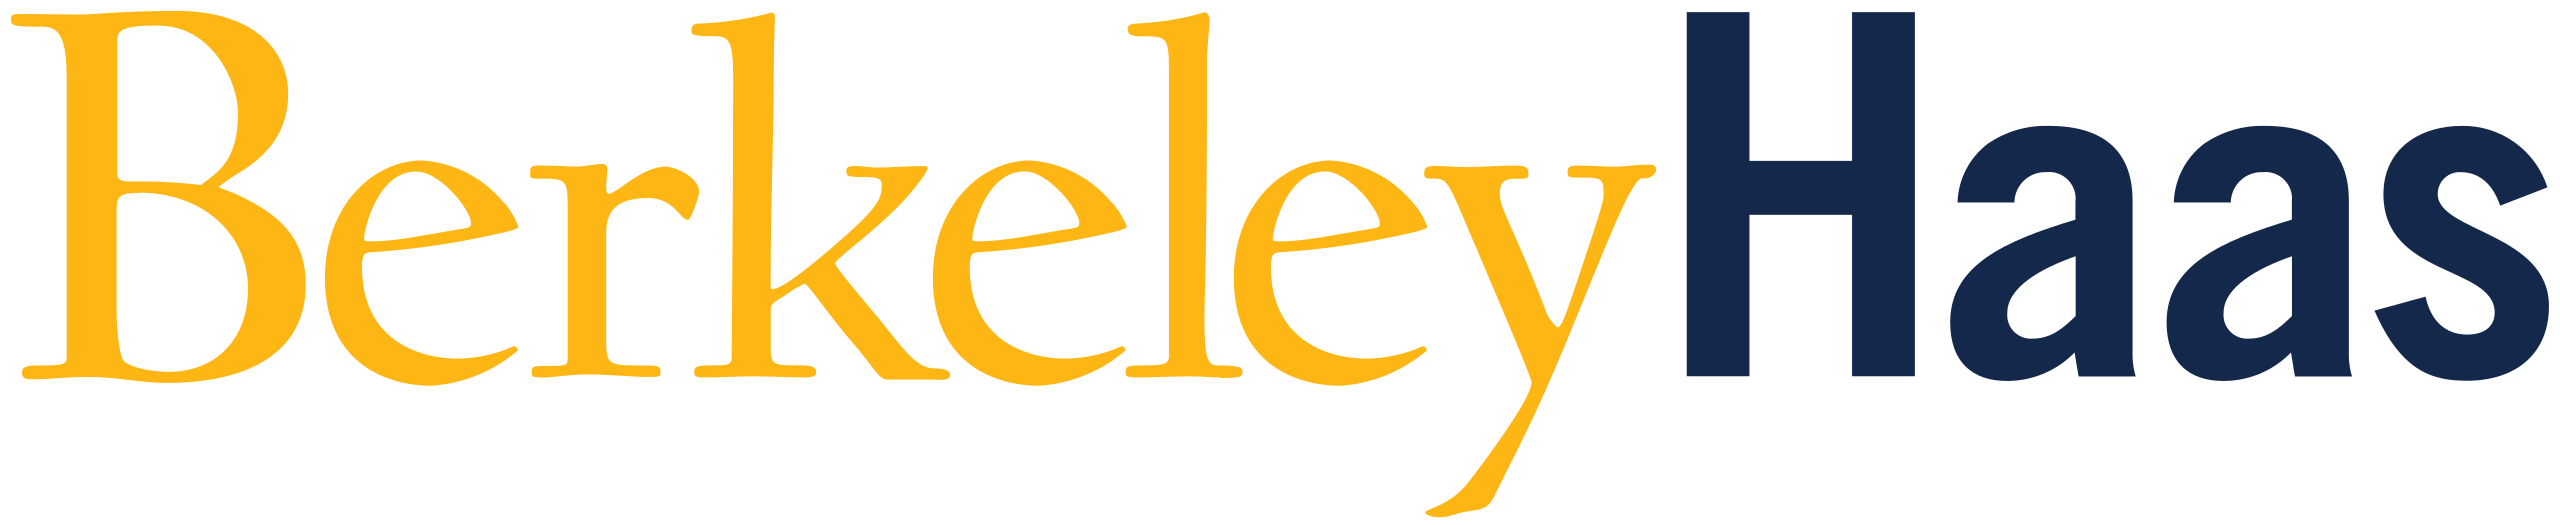 Berkeley_Haas